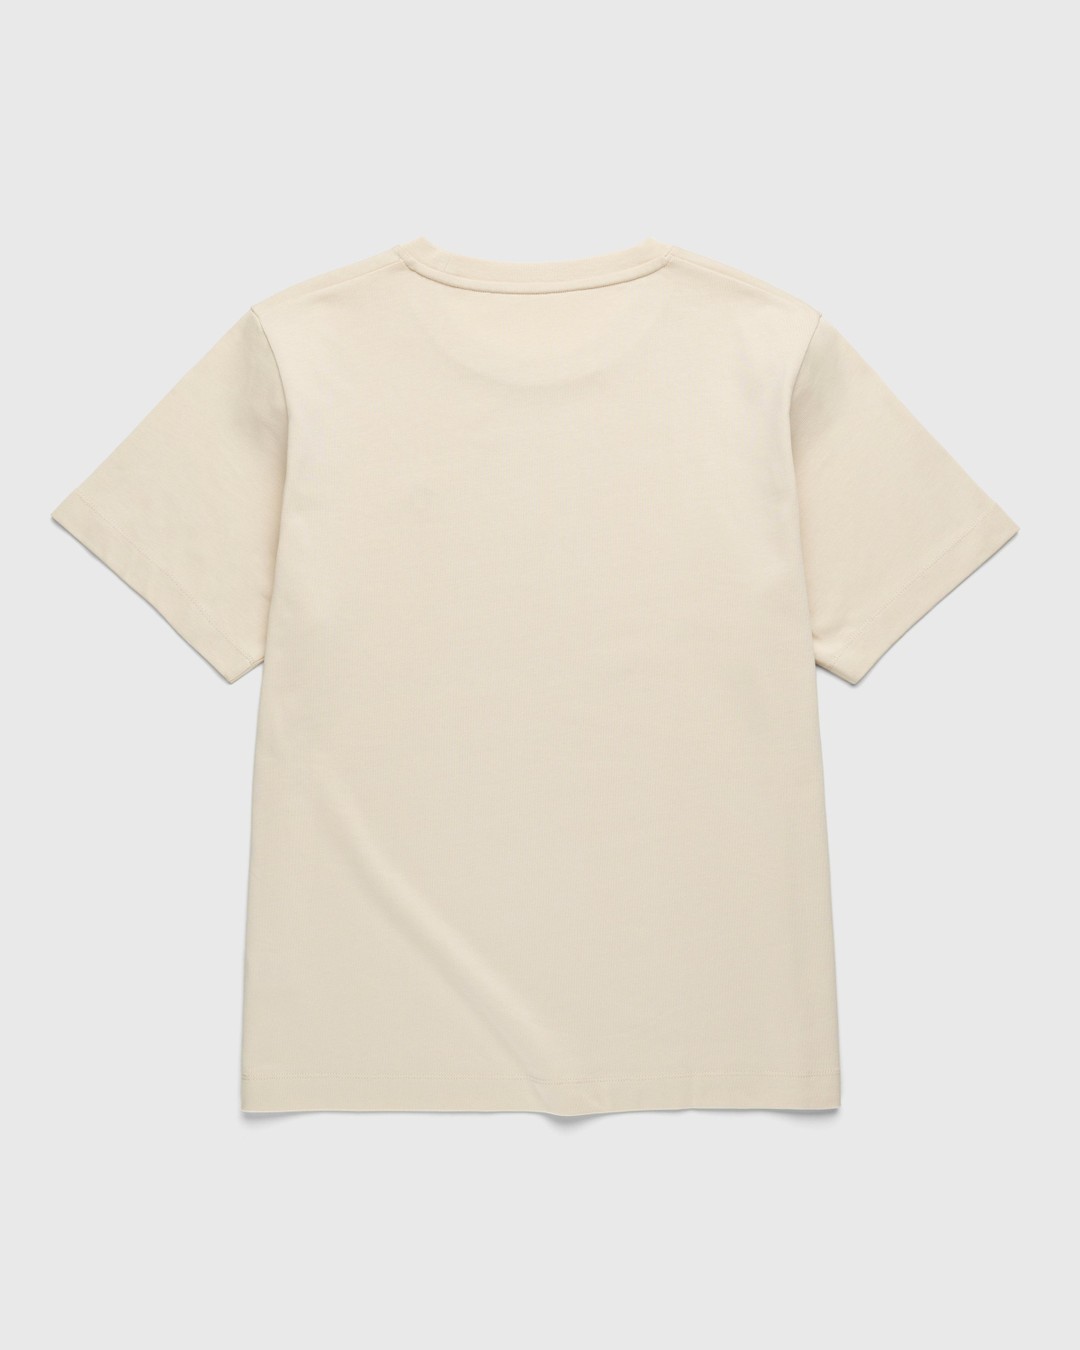 Marine Serre – Organic Cotton T-Shirt Beige - Tops - Beige - Image 2